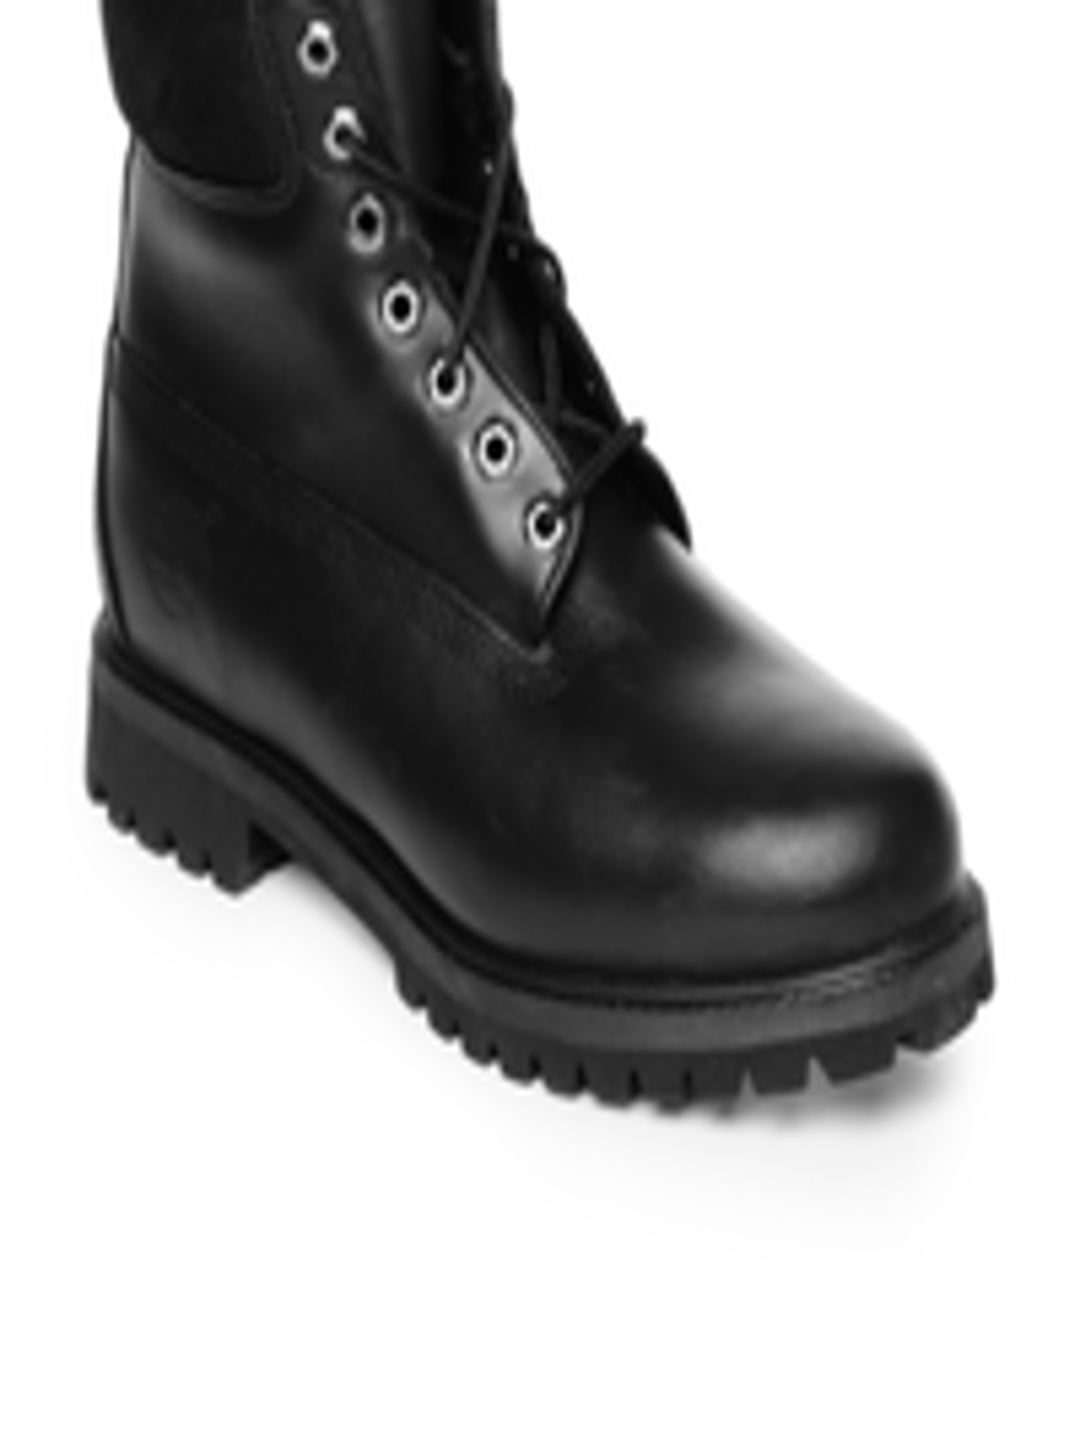 Buy Timberland Men 6 Inch Premium Black Boots - Boots for Men 92373